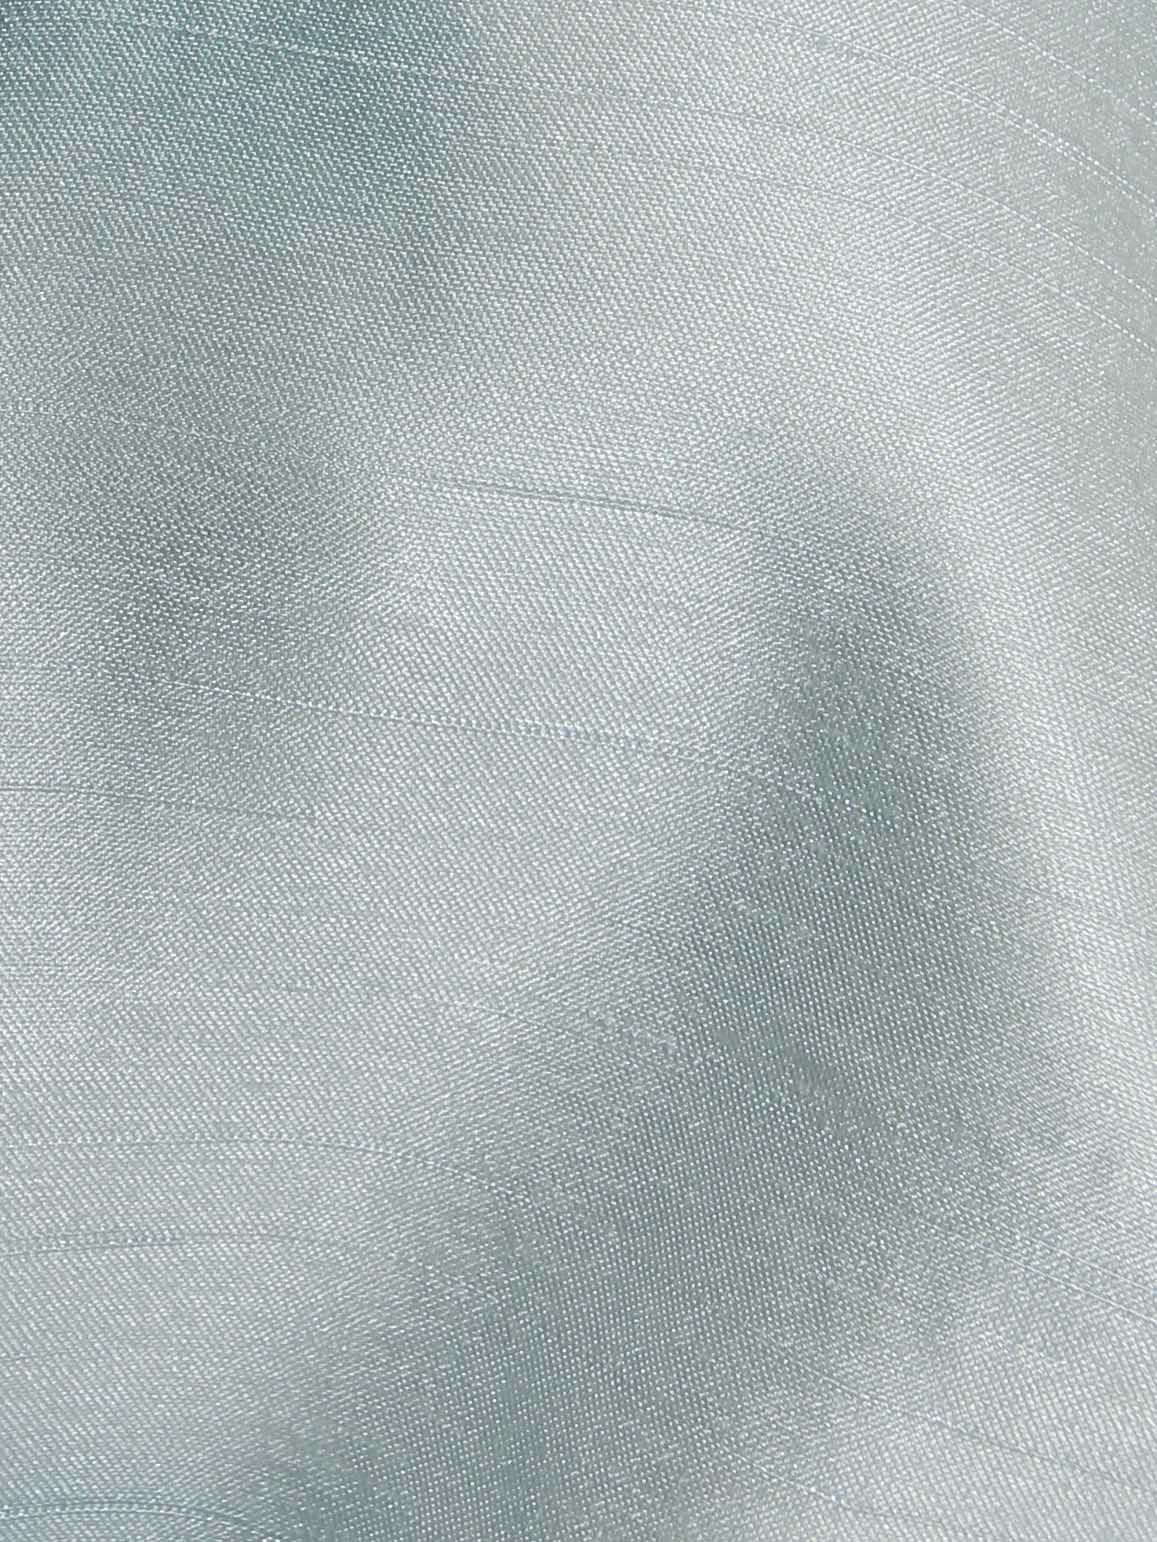 Aqua Polyester Satin Backed Dupion - Clarity